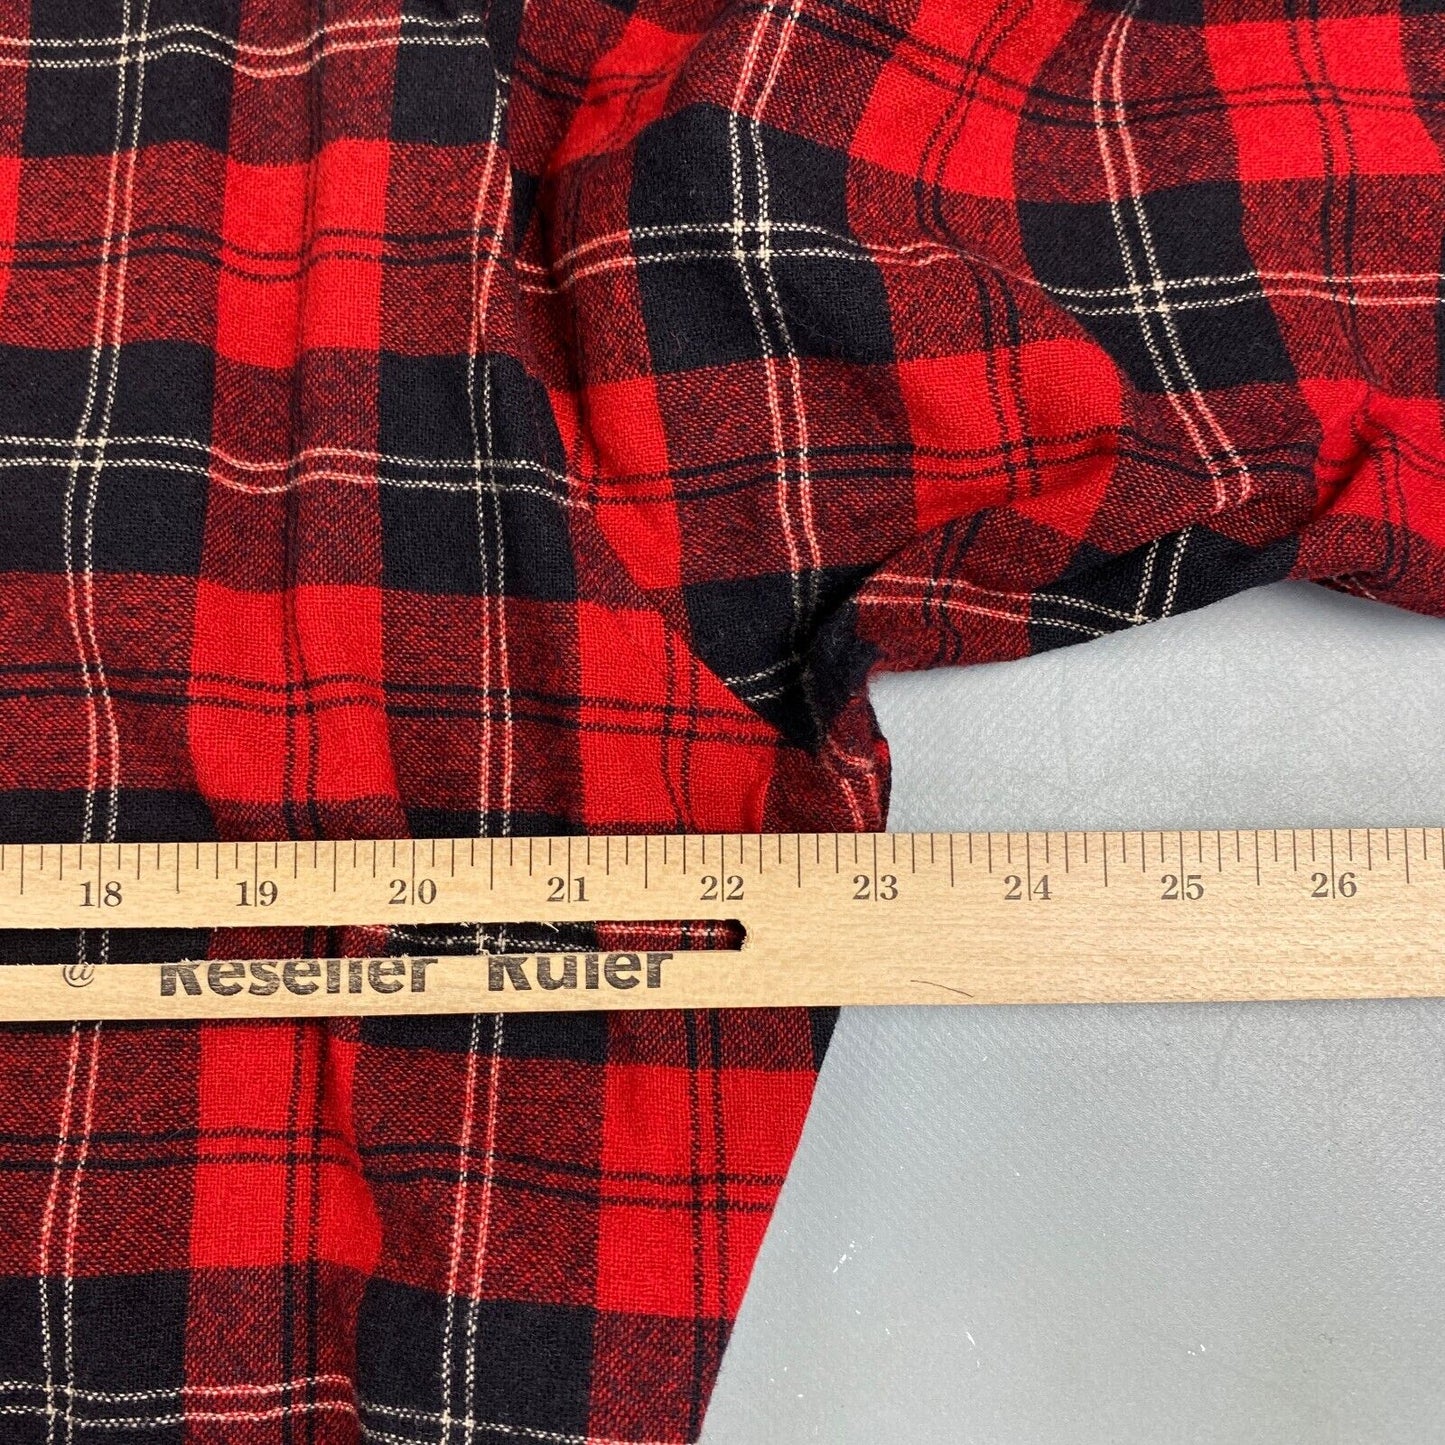 VINTAGE 90s Pendleton Red Wool Plaid Flannel Button Up Shirt sz Large Adult